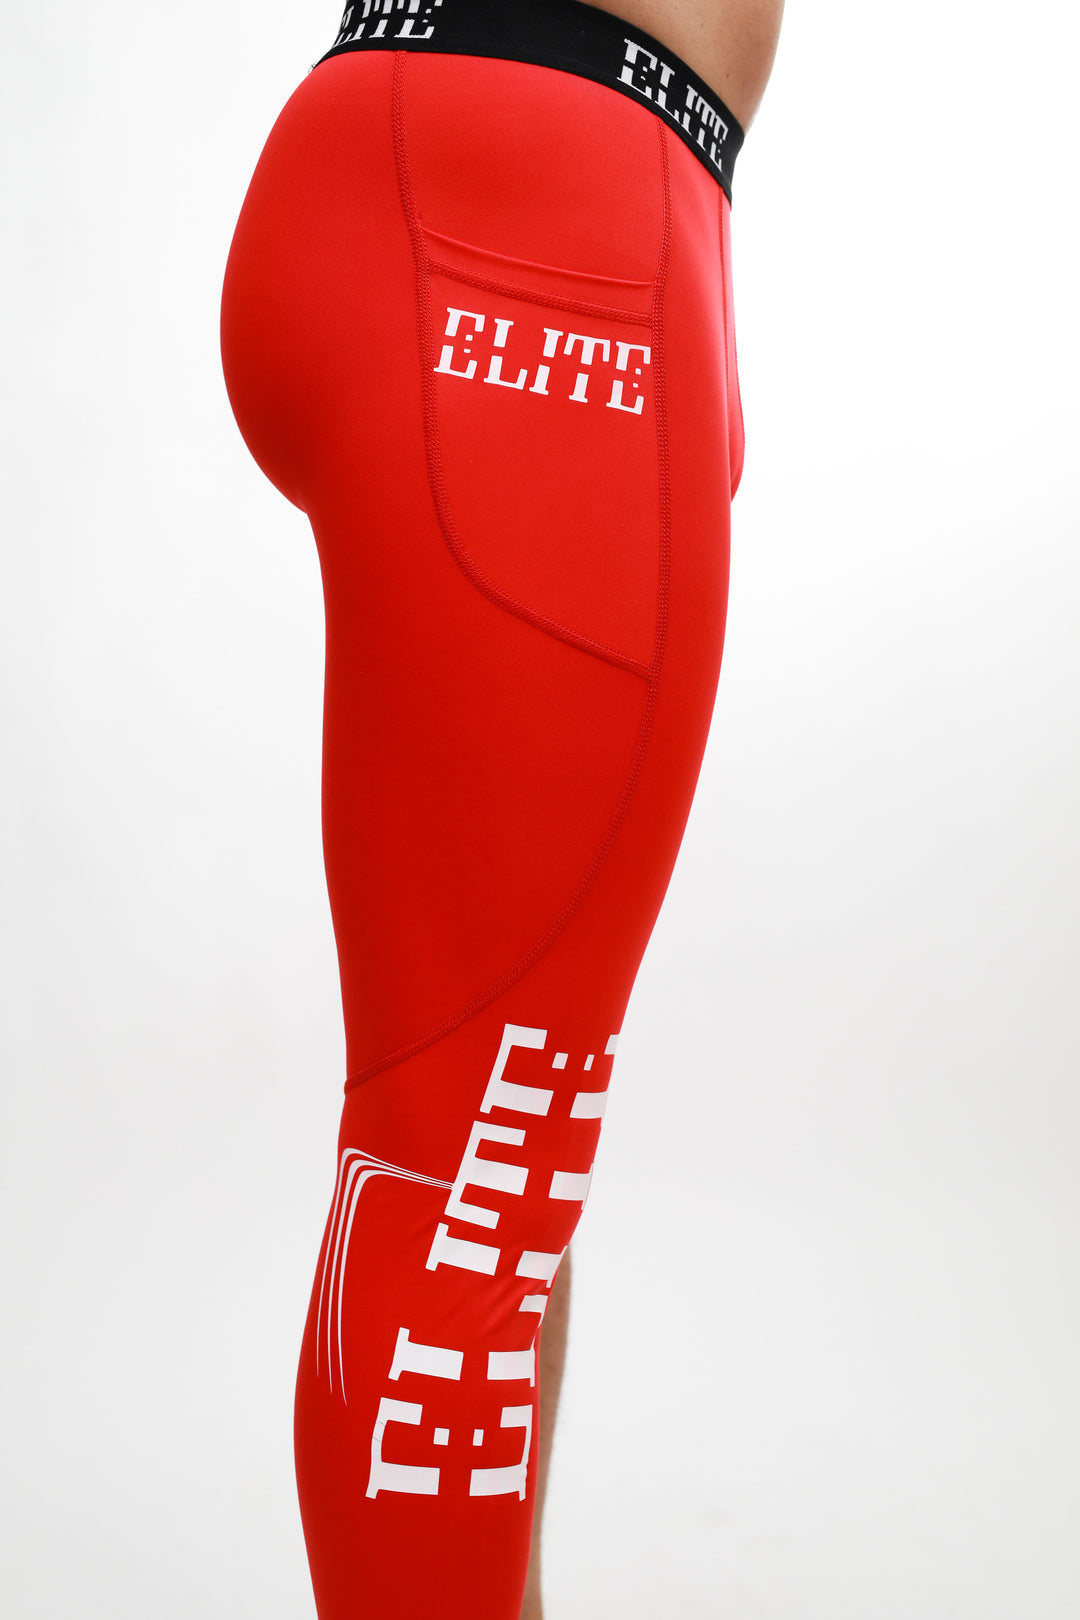 Elite One Legged Tights - Red – ELITE BY ECW - Team Sports